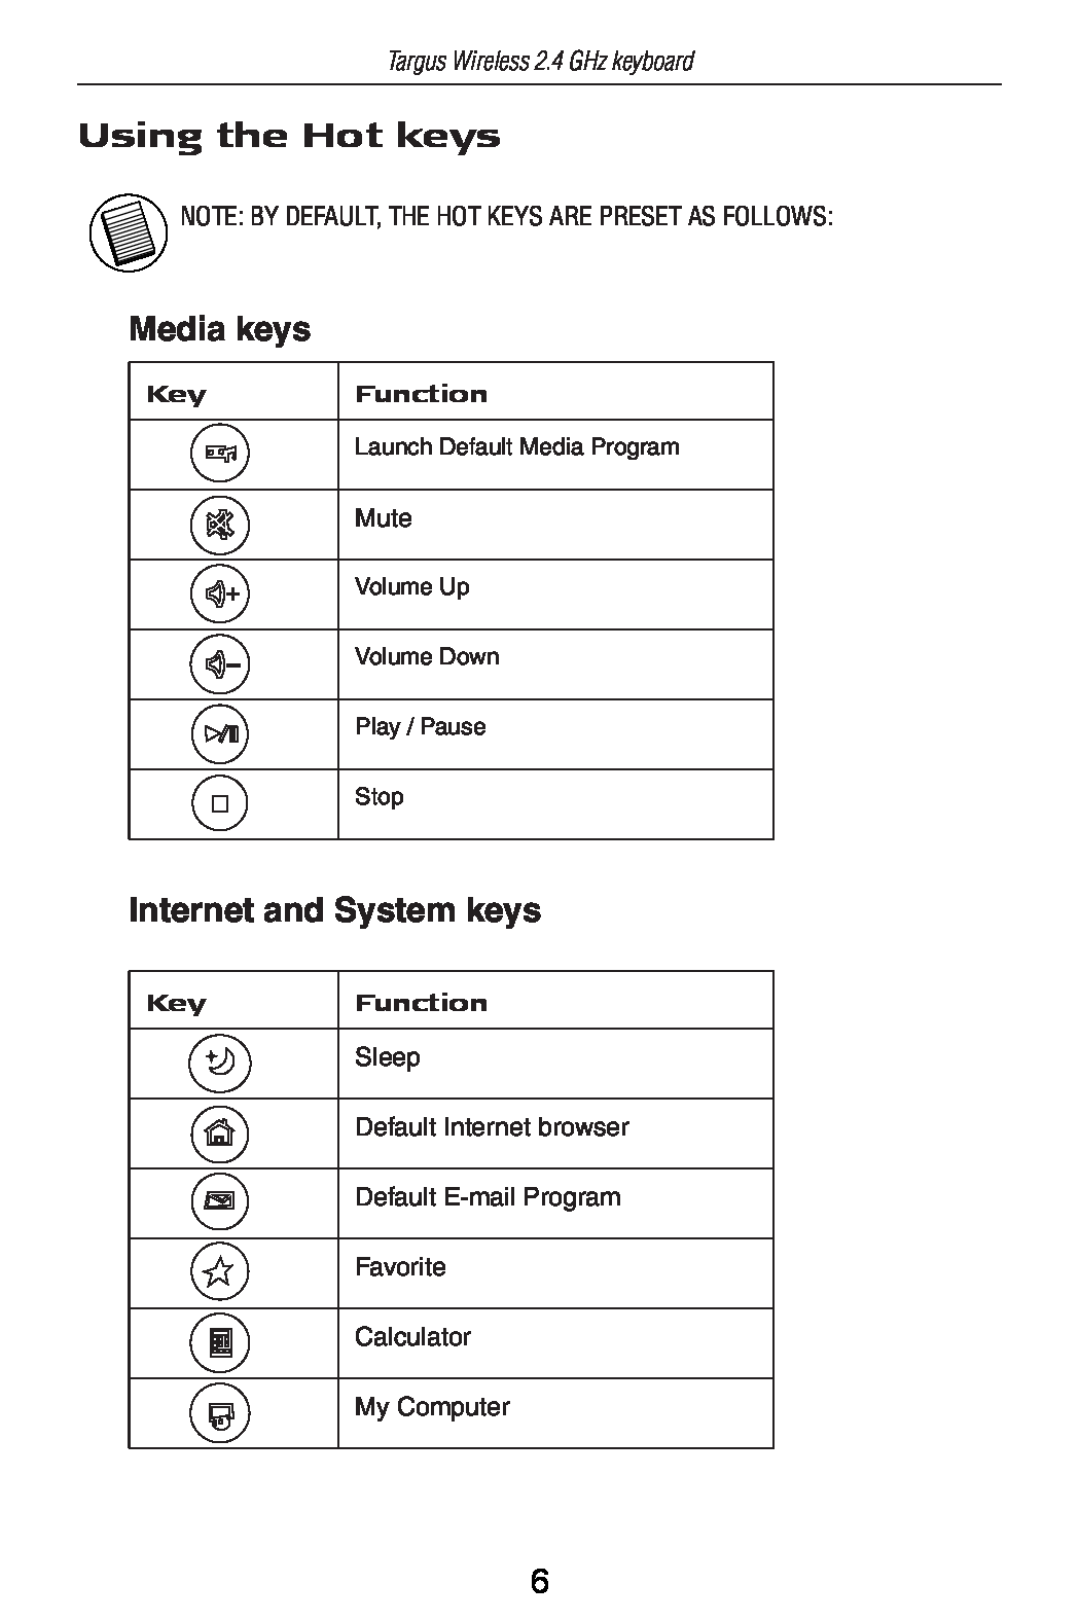 Targus AKB24US Using the Hot keys, Media keys, Internet and System keys, Targus Wireless 2.4 GHz keyboard, Function, Stop 